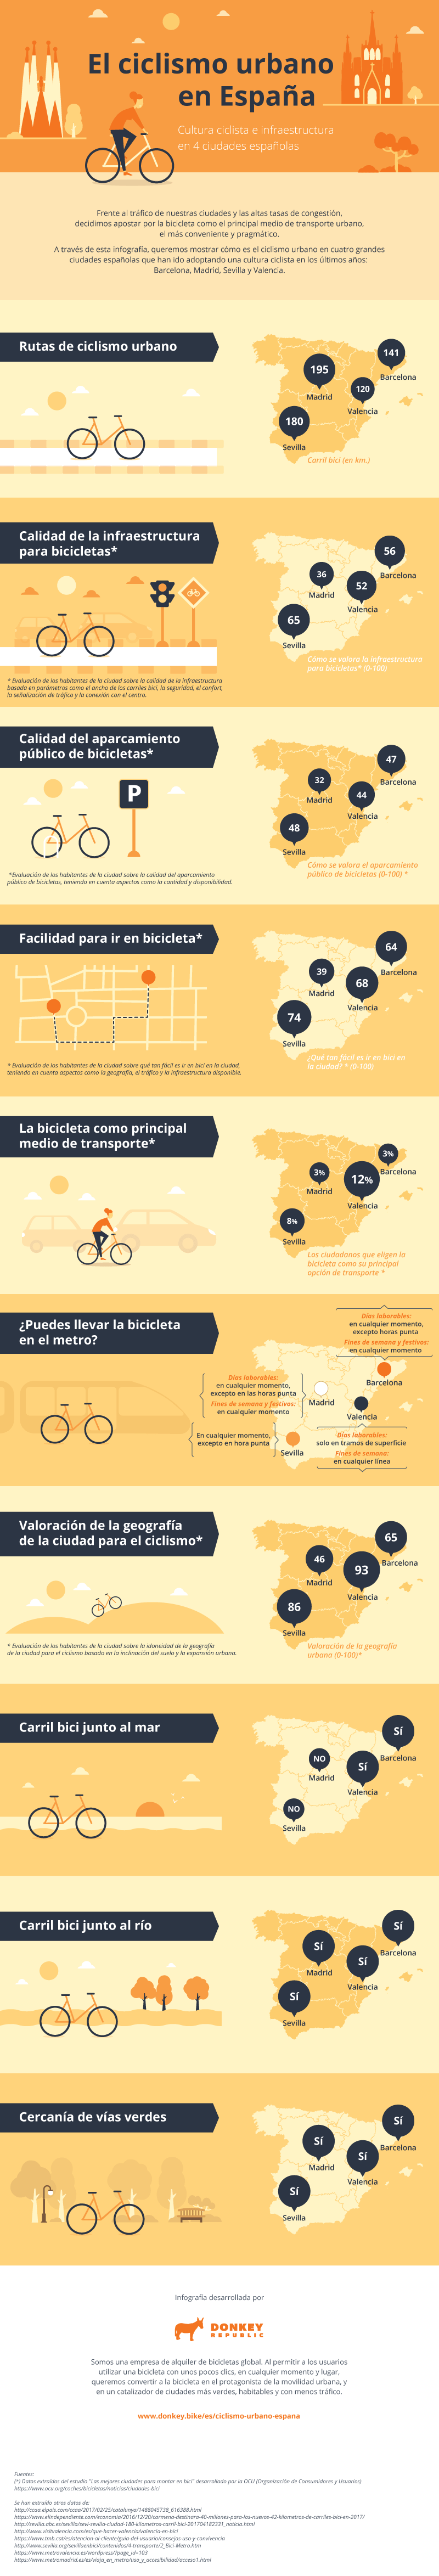 Infografía, cultura ciclista e infraestructura en 4 ciudades españolas